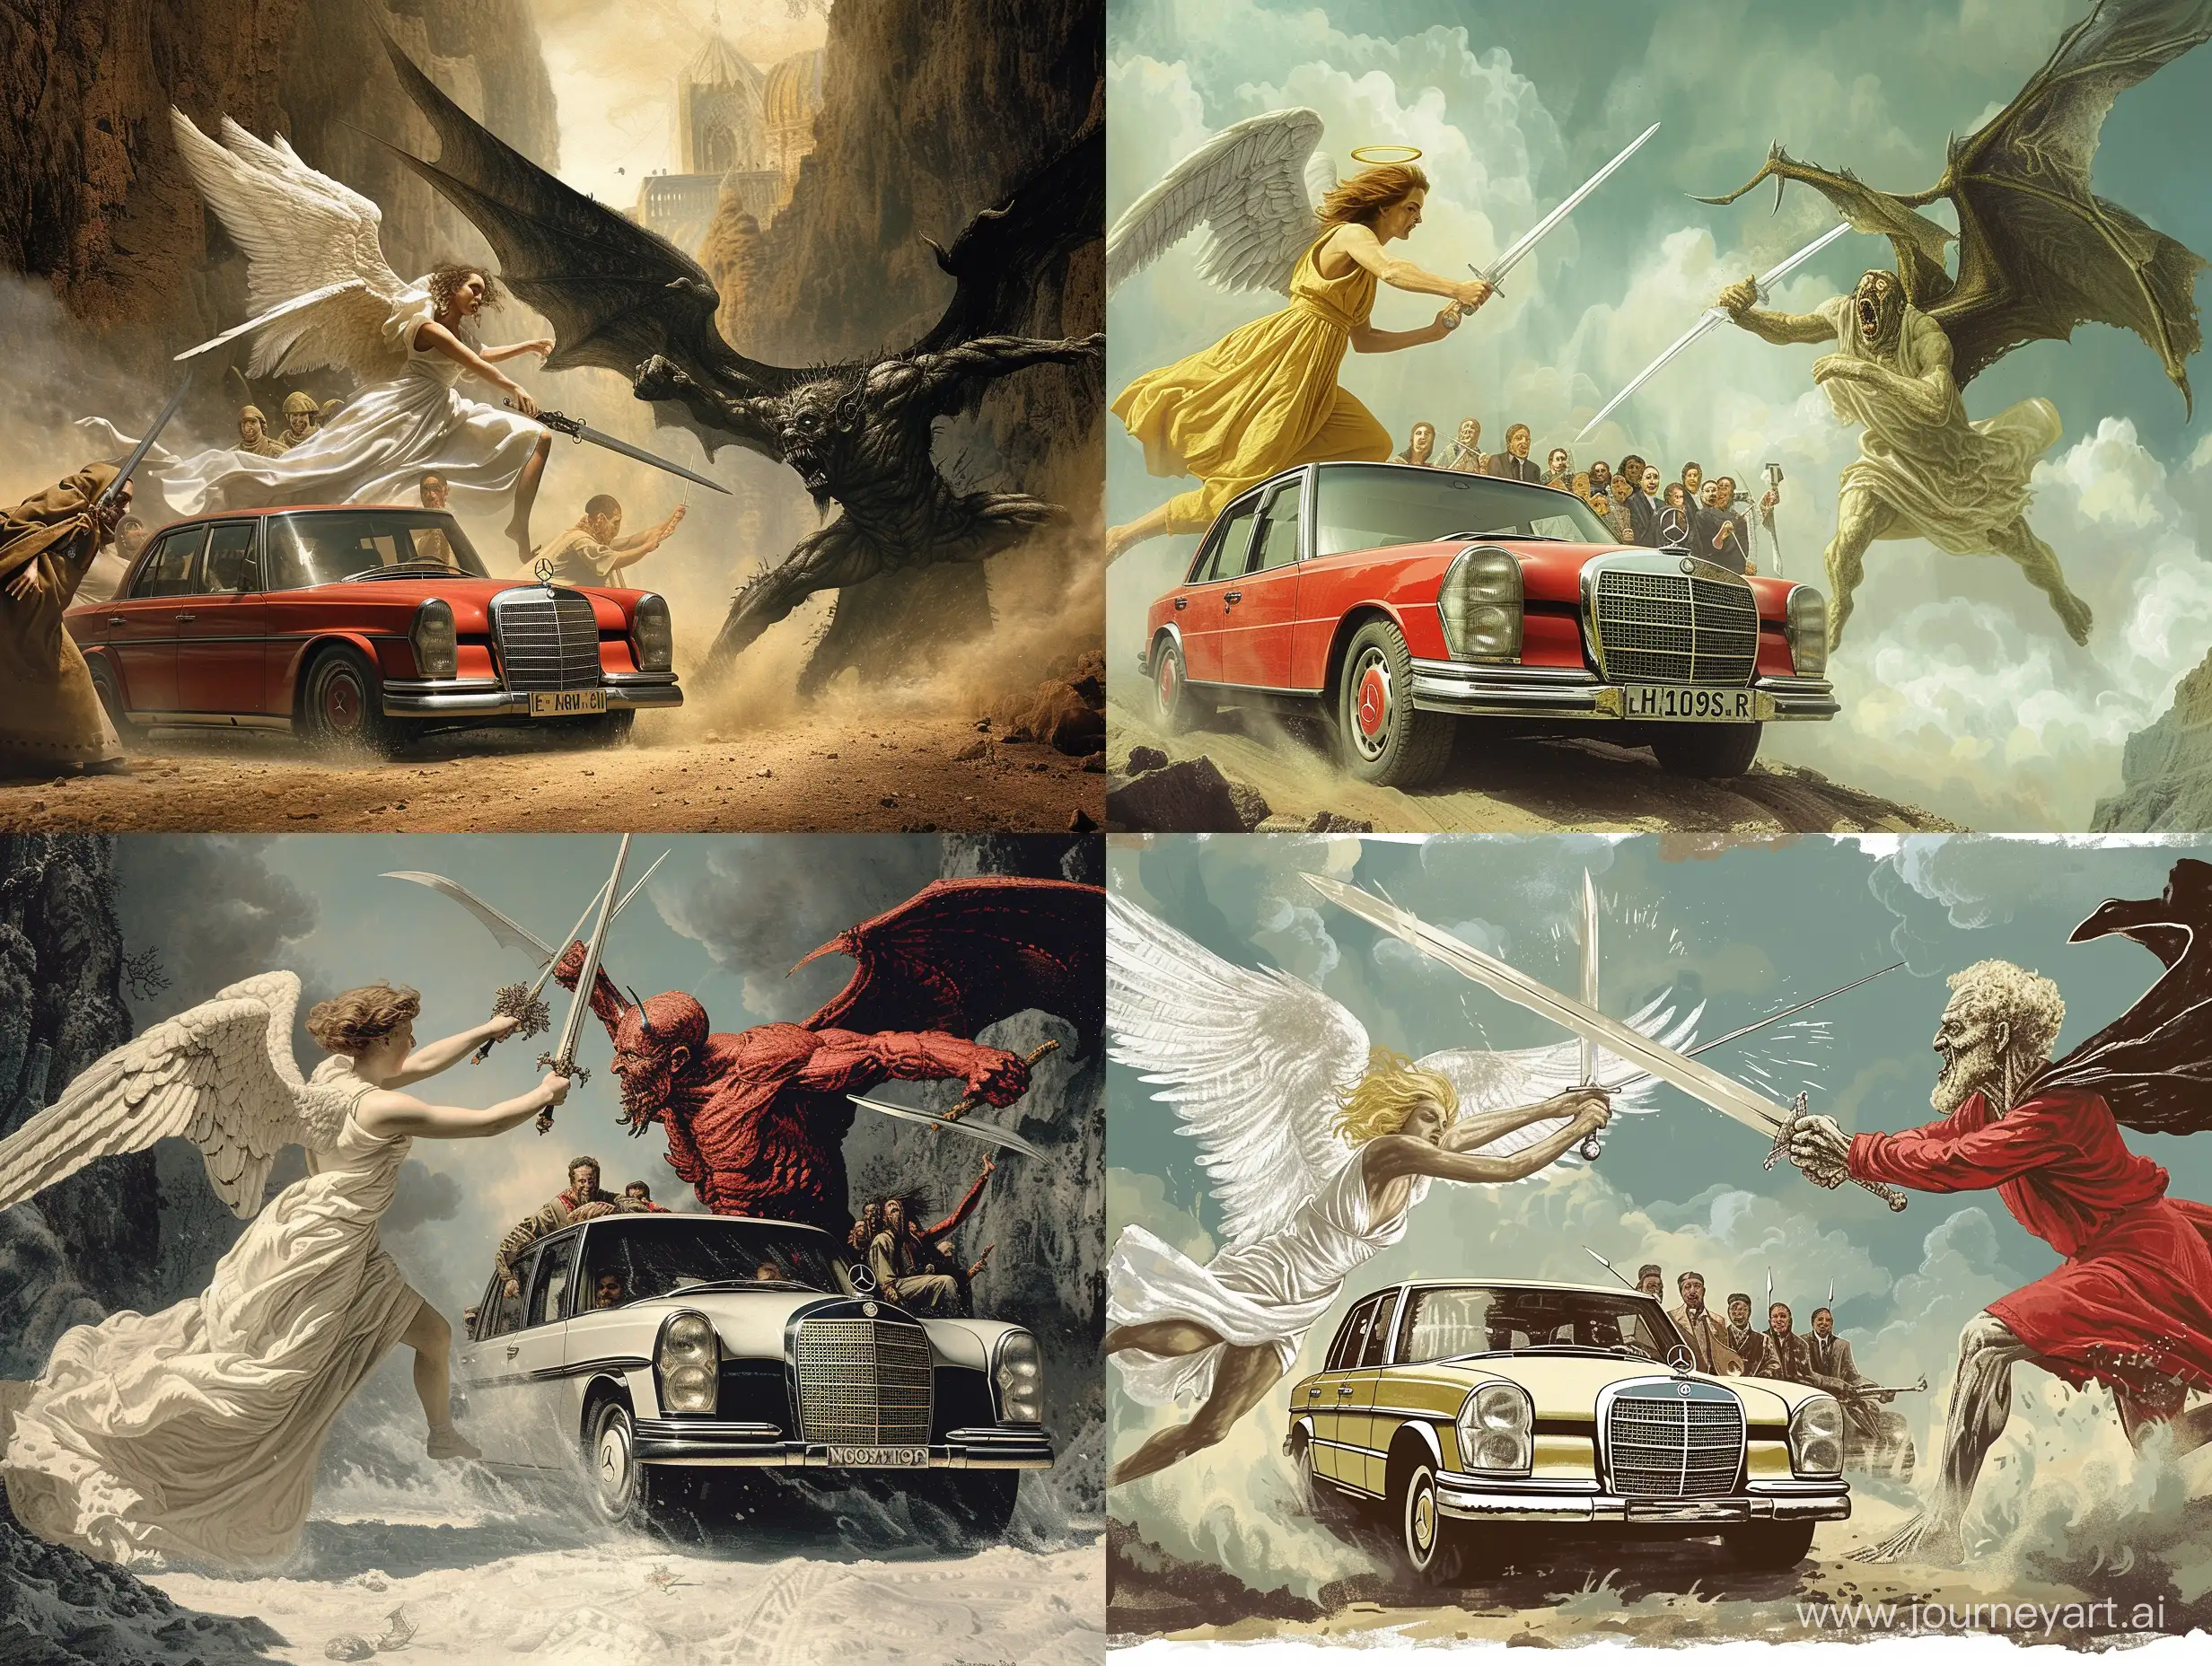 Epic-Sword-Battle-Between-Angel-and-Demon-with-Armenians-in-Vintage-Mercedes